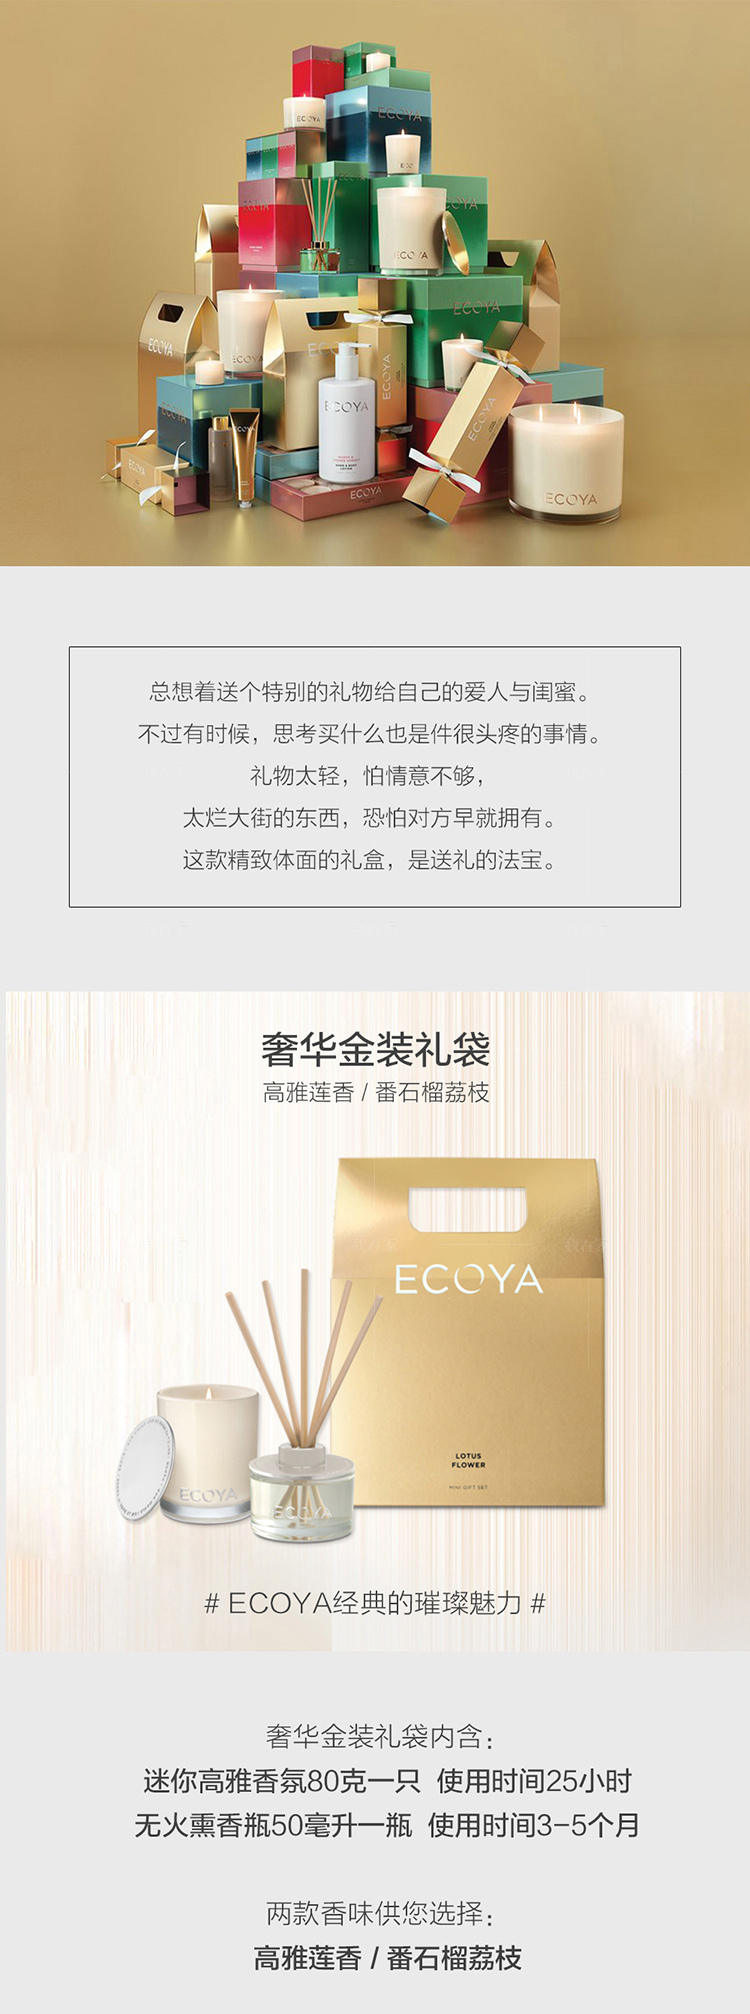 ECOYA香氛系列奢华金装礼袋香氛两件套的详细介绍